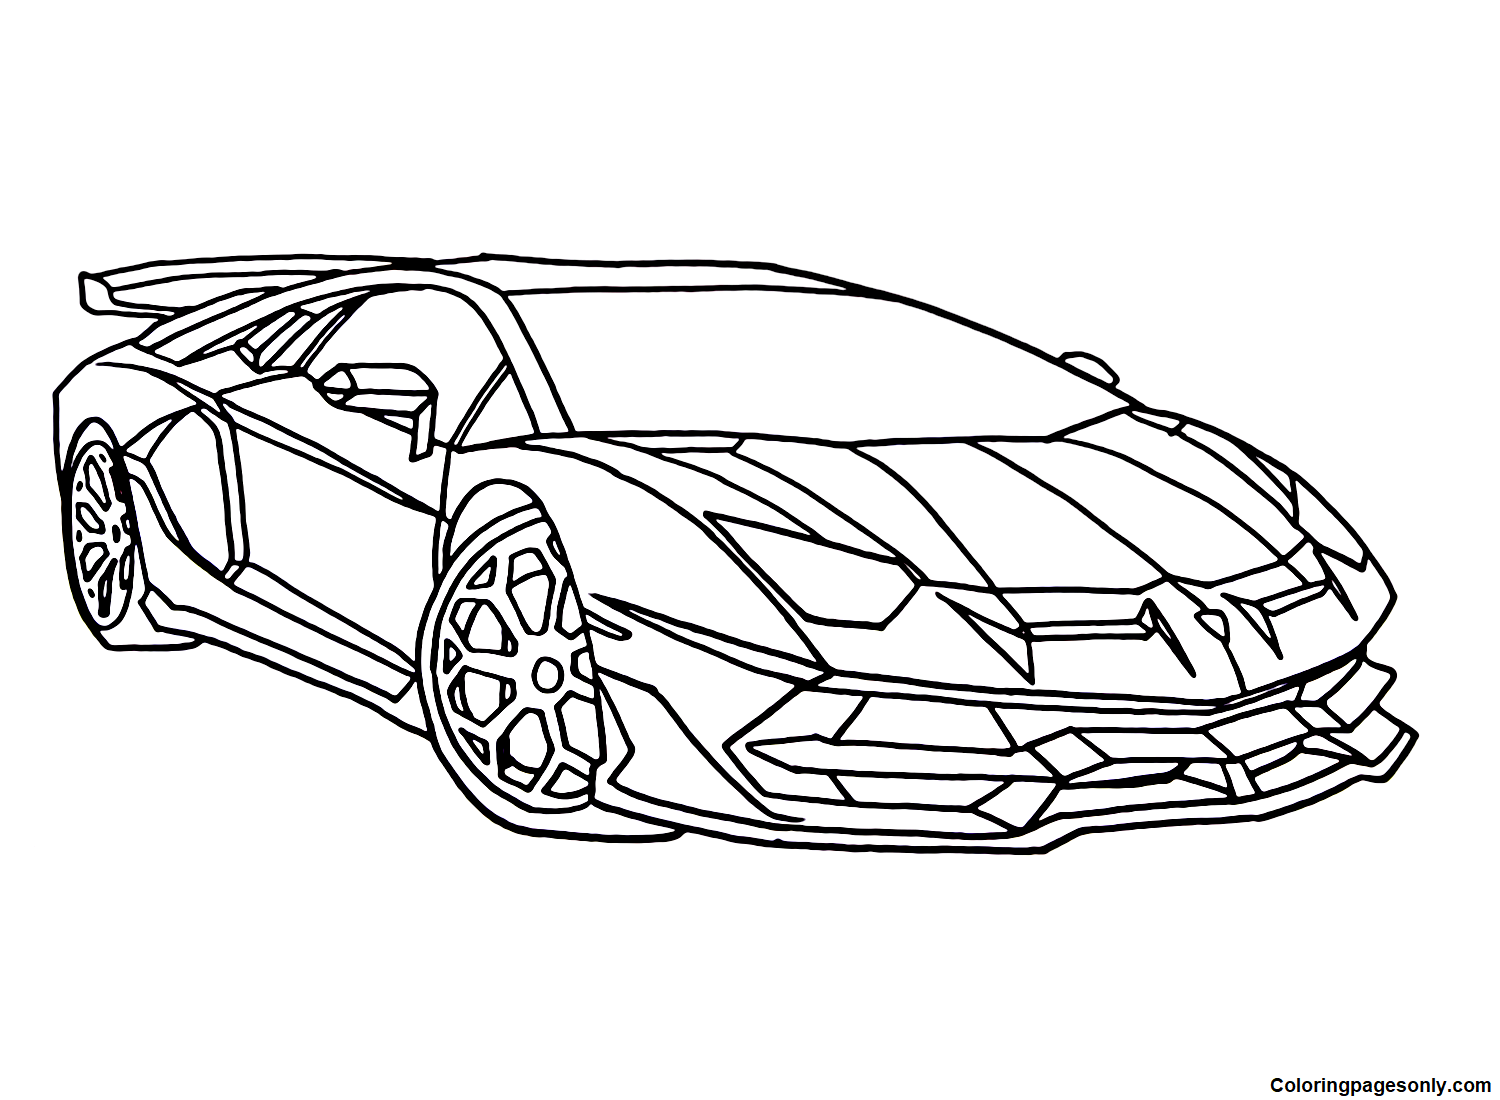 Dibujo de Lamborghini Aventador para colorear